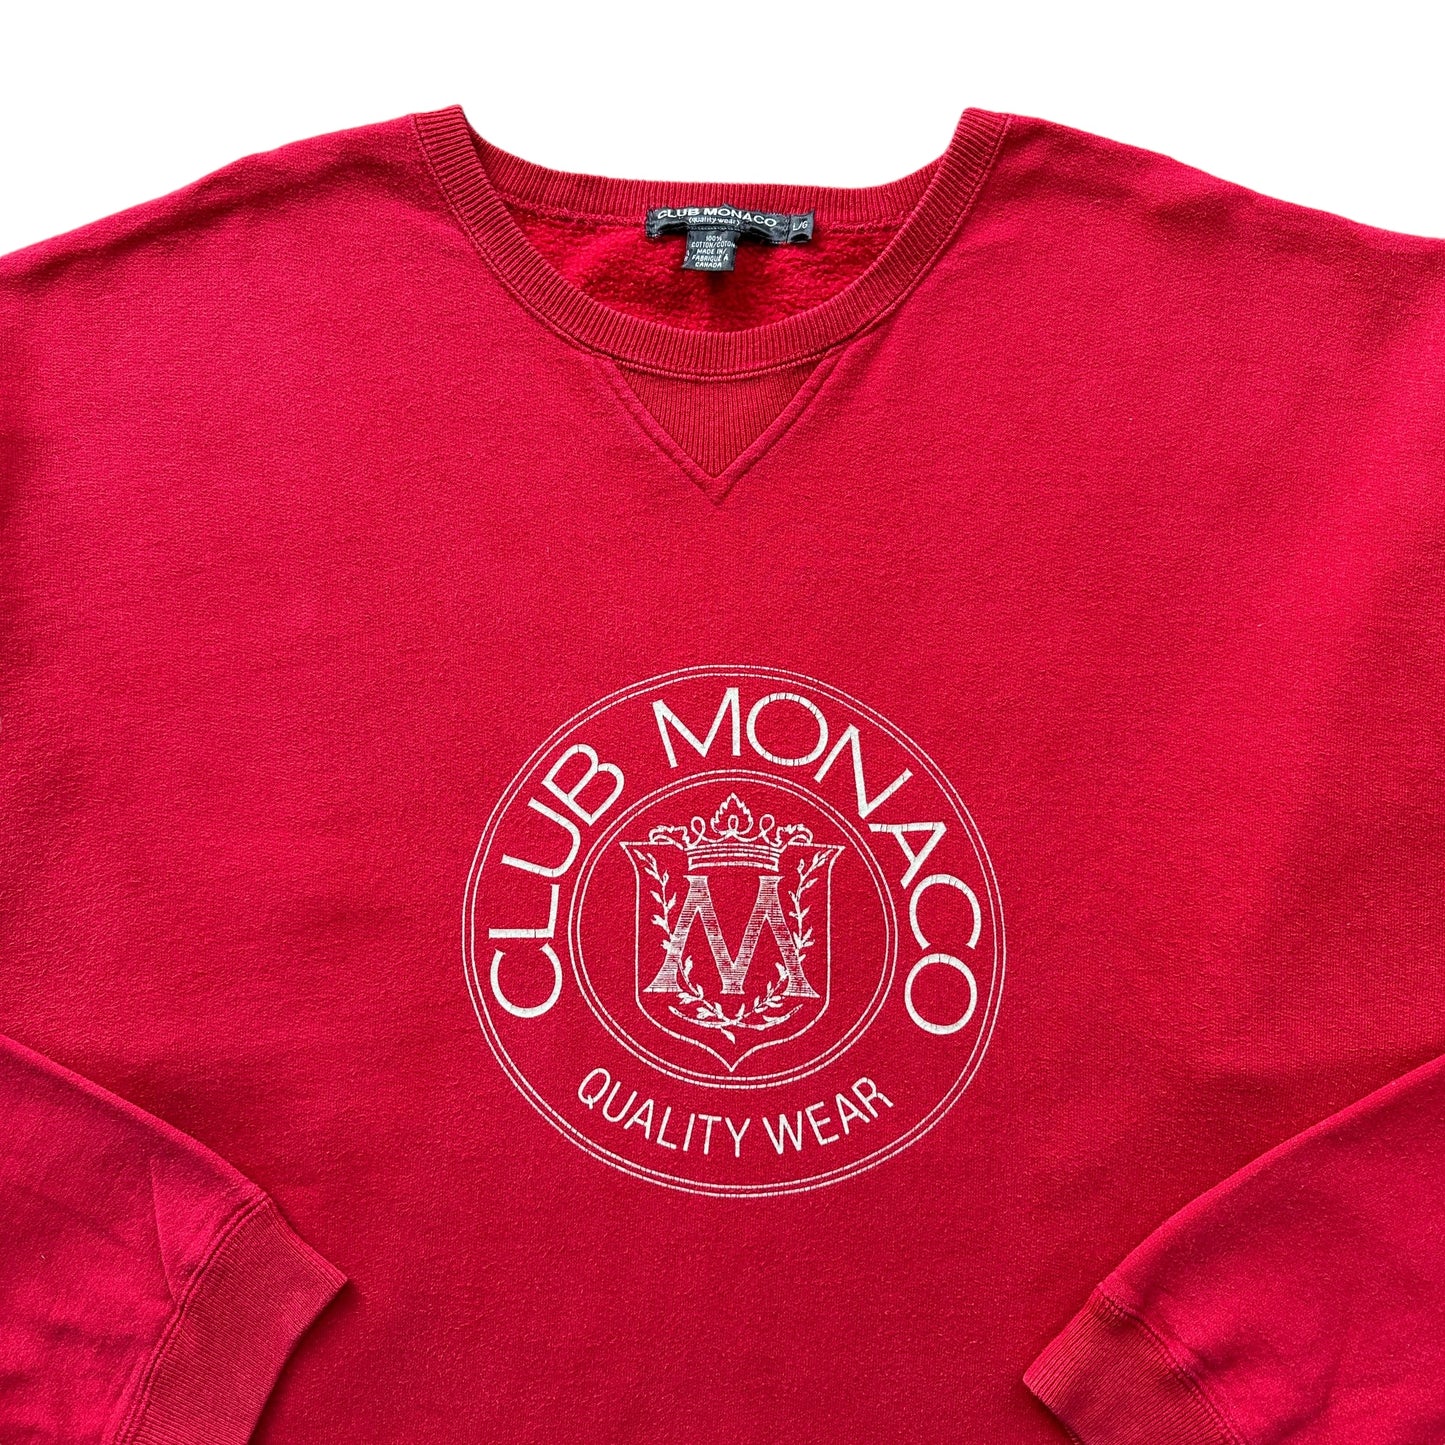 Club monaco crewneck Made in canada🇨🇦 large